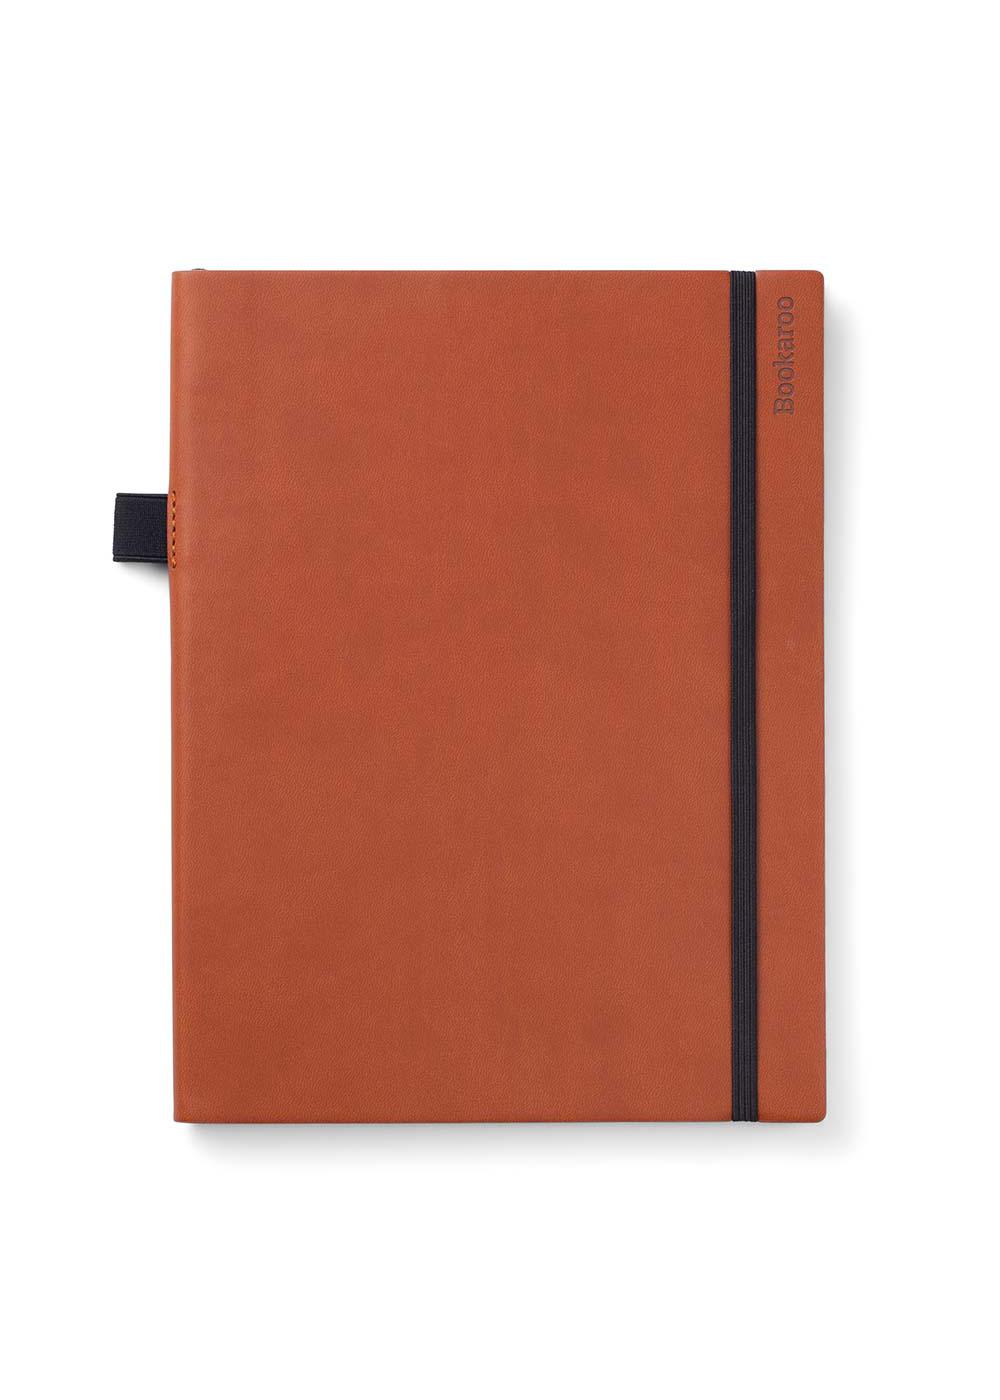 Bookaroo Bigger Things Notebook - Brown; image 2 of 2